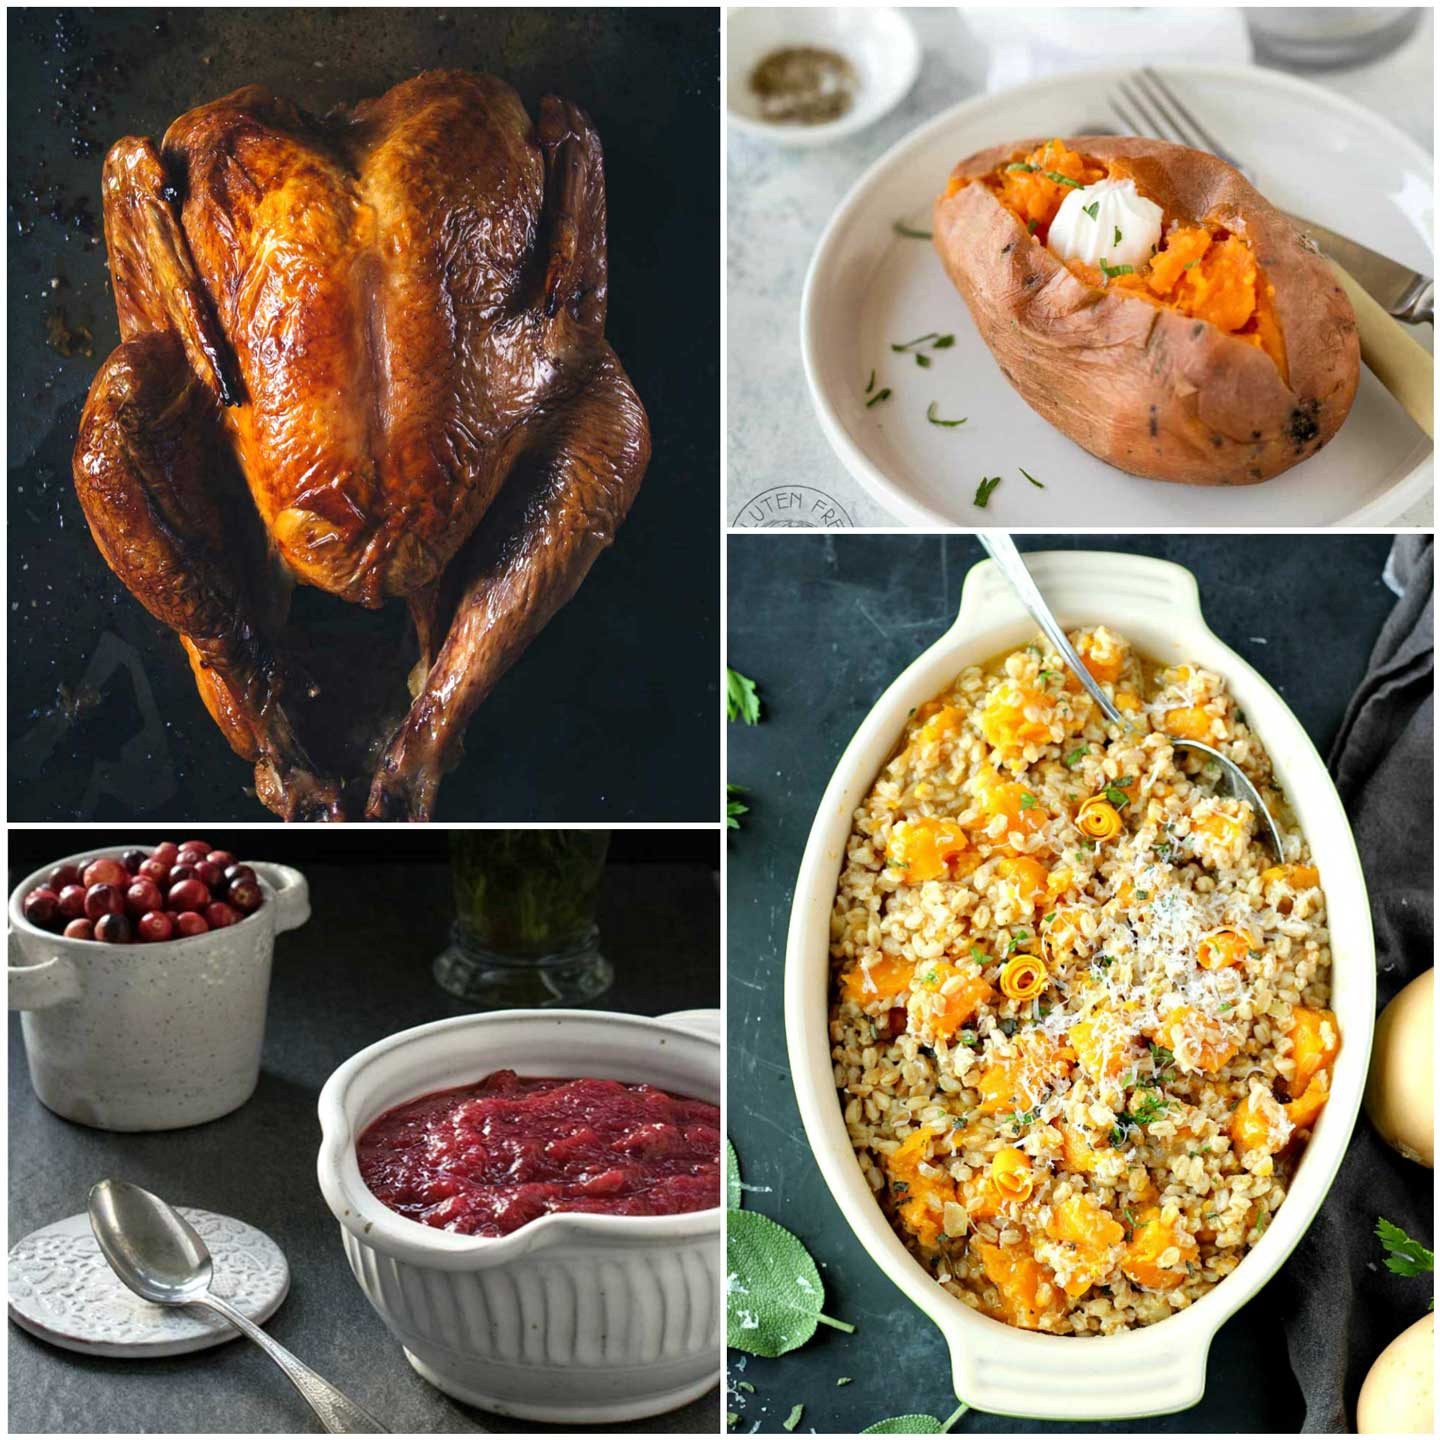 Instant Pot Thanksgiving Recipes
 17 Healthy Instant Pot Thanksgiving Recipes That Save